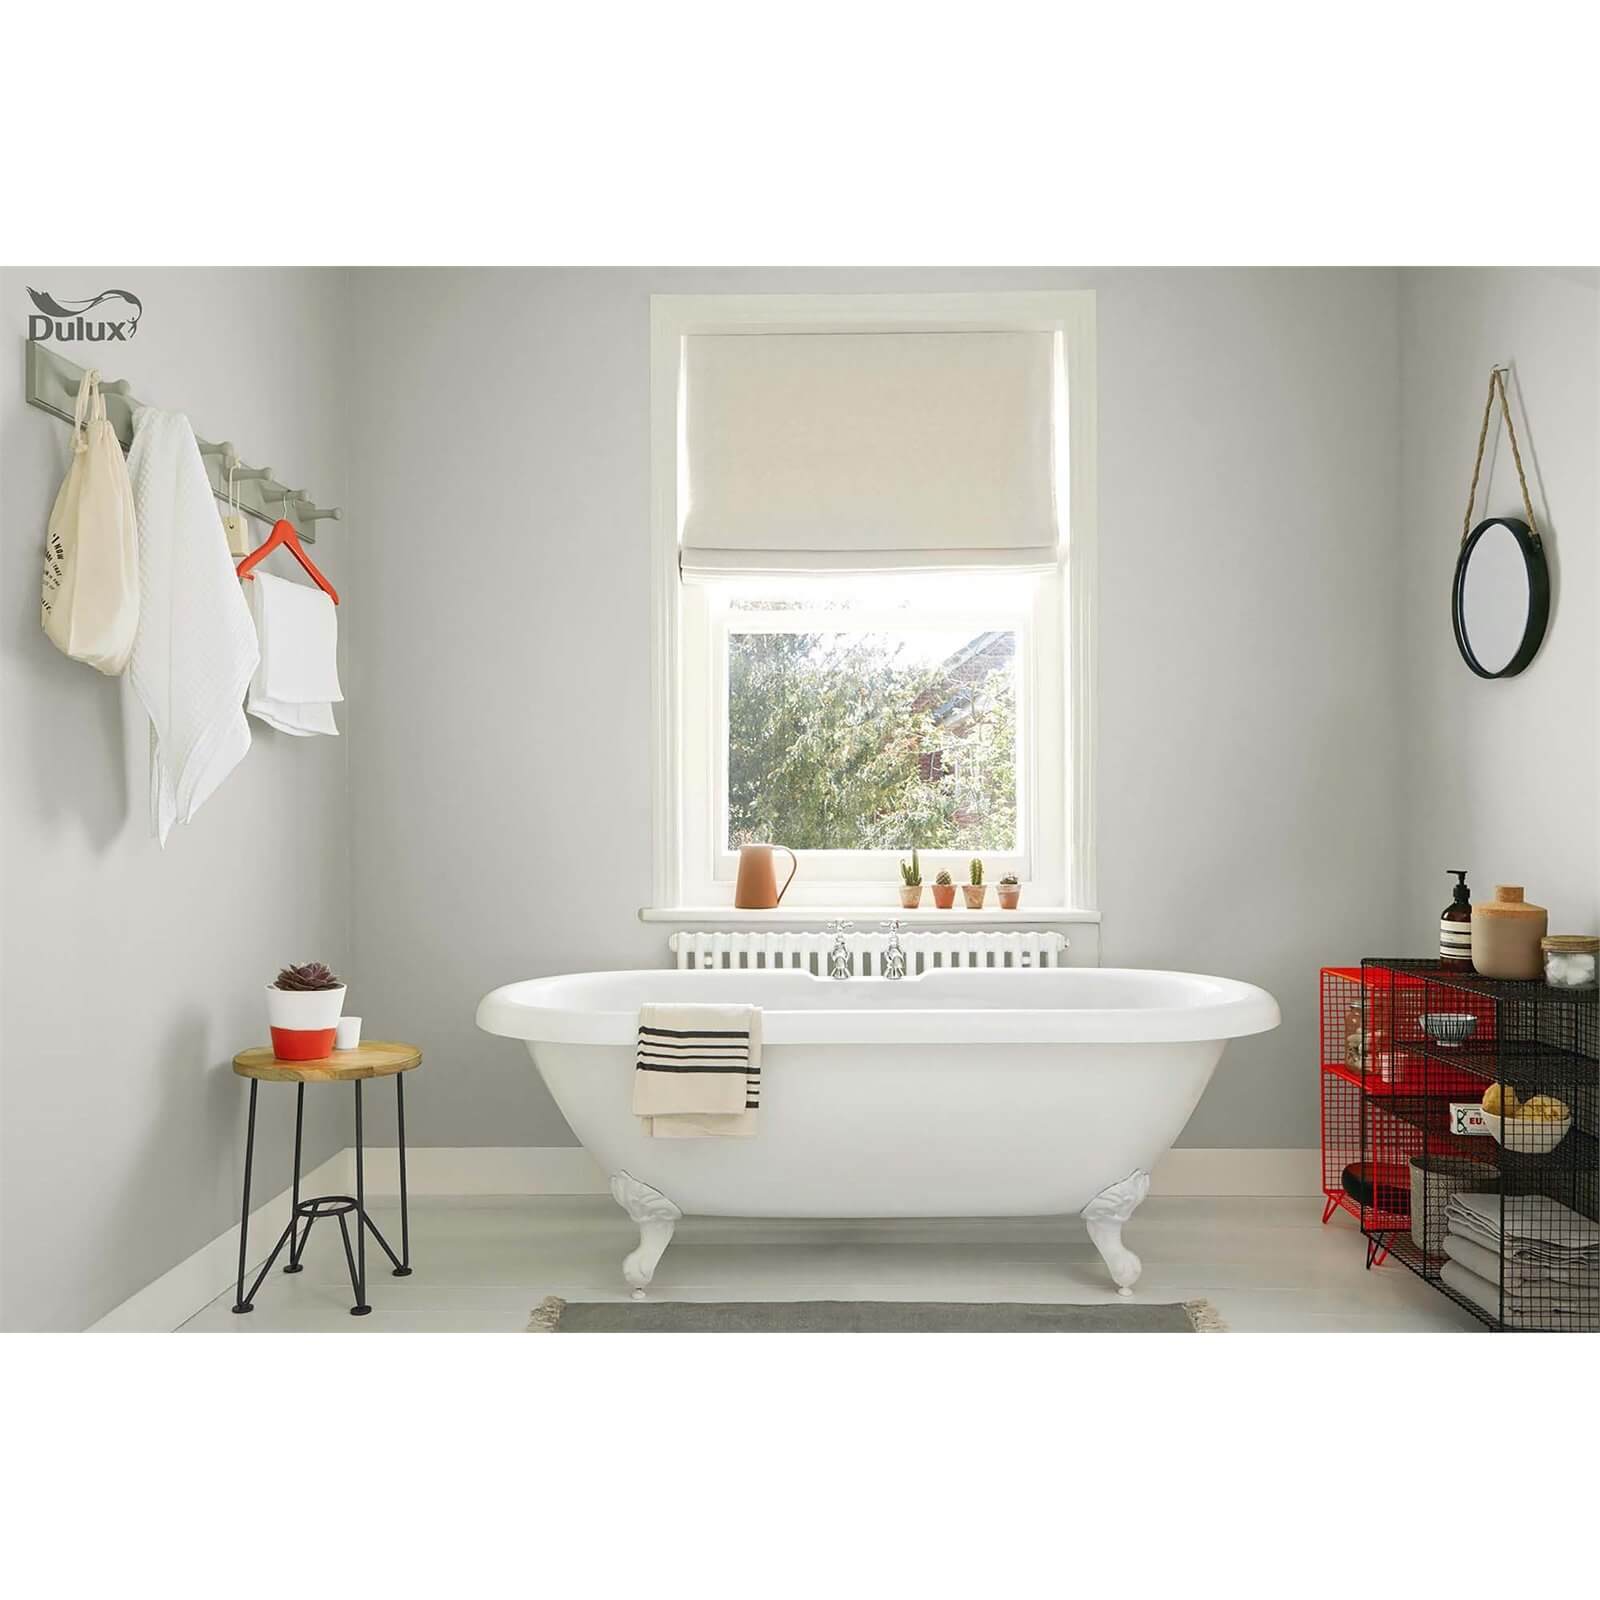 Dulux Easycare Bathroom Polished Pebble Soft Sheen Paint - 2.5L